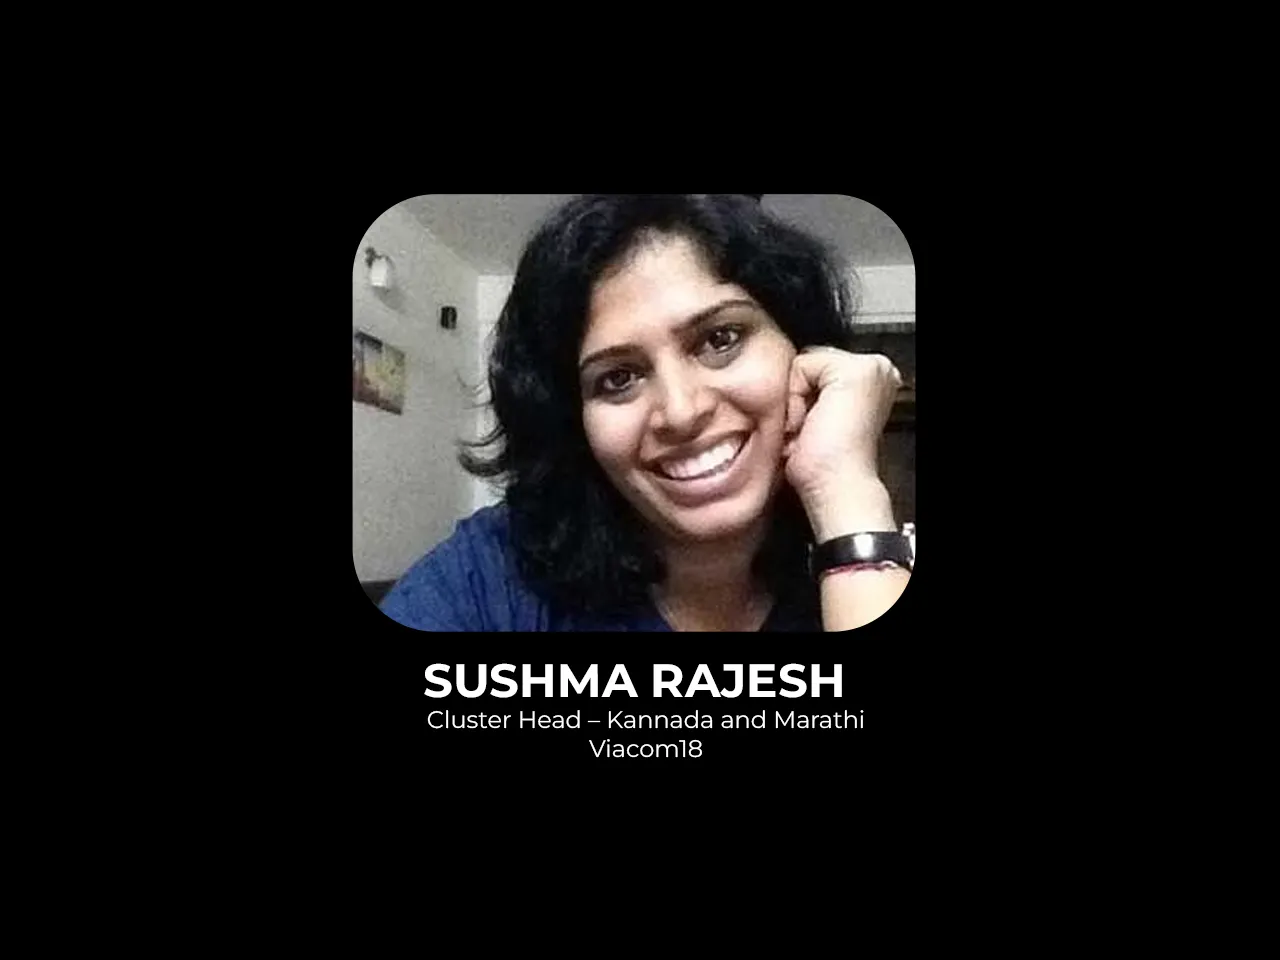 Sushma Rajesh joins Viacom18 as Cluster Head – Kannada and Marathi